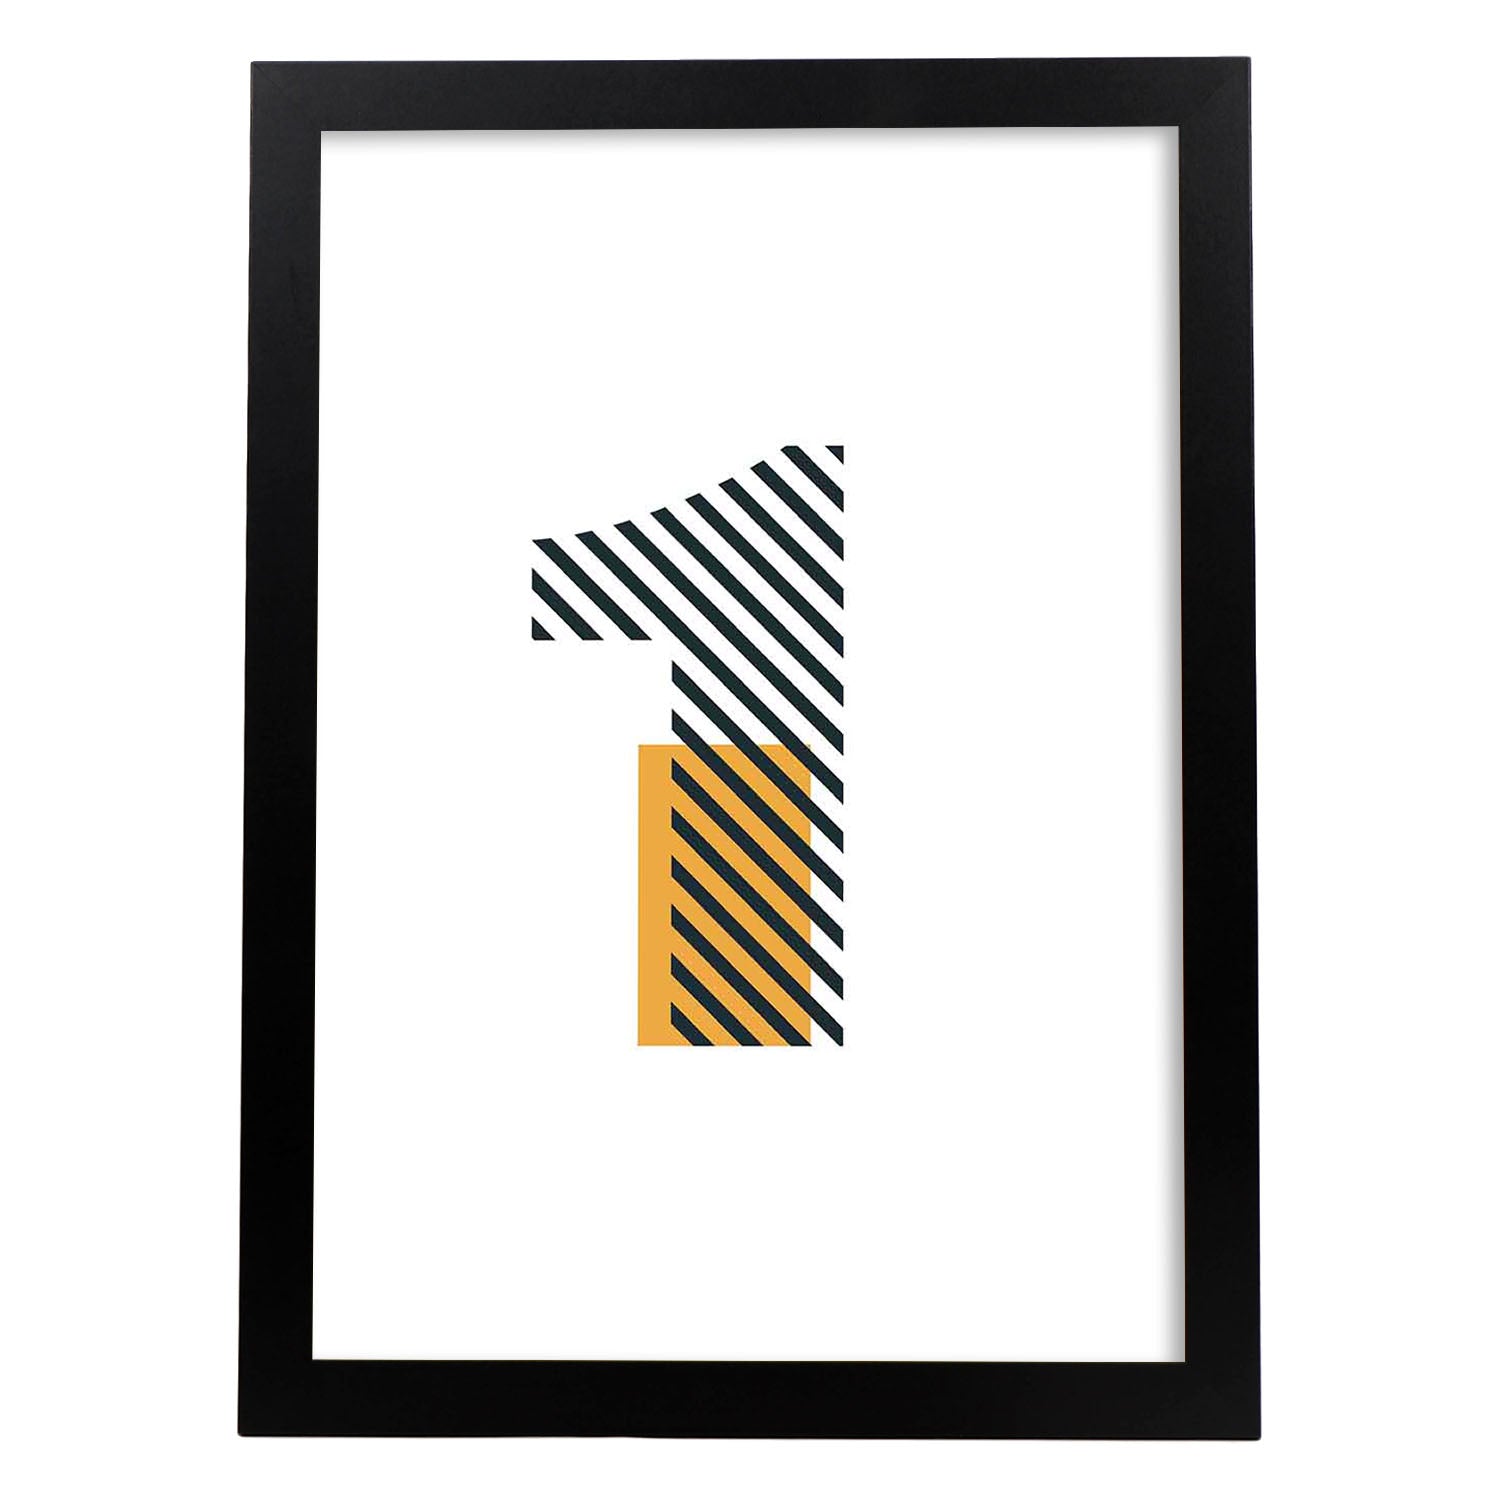 Poster de número 1. Lámina estilo Geometria con imágenes del alfabeto.-Artwork-Nacnic-A3-Marco Negro-Nacnic Estudio SL